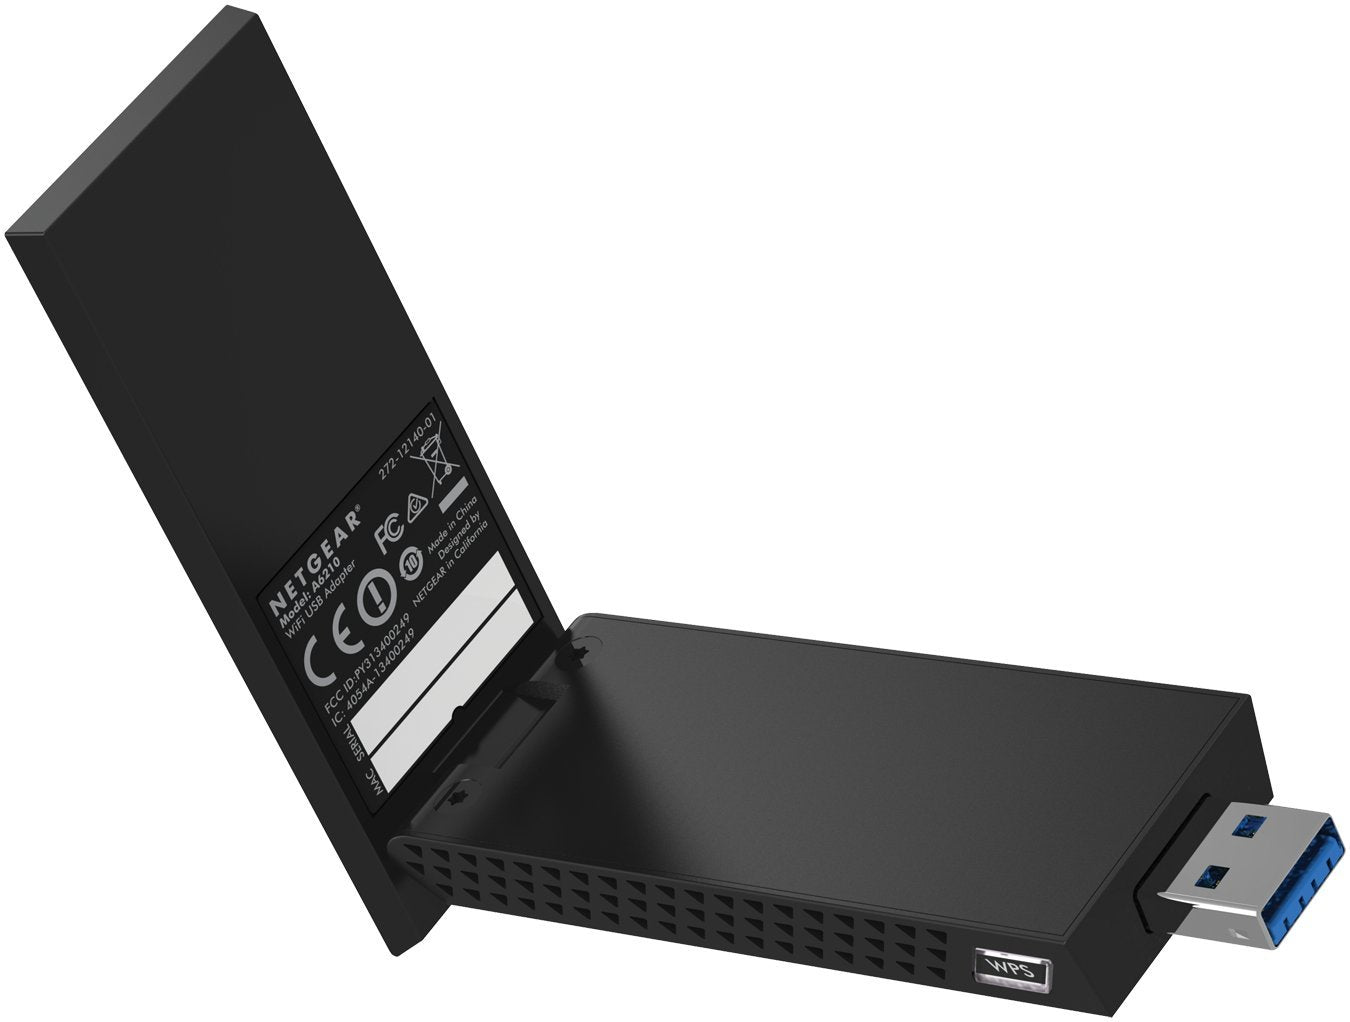 Netgear AC1200 A6210-100PES USB High Gain Dual Band Wi-Fi Adapter (Black)